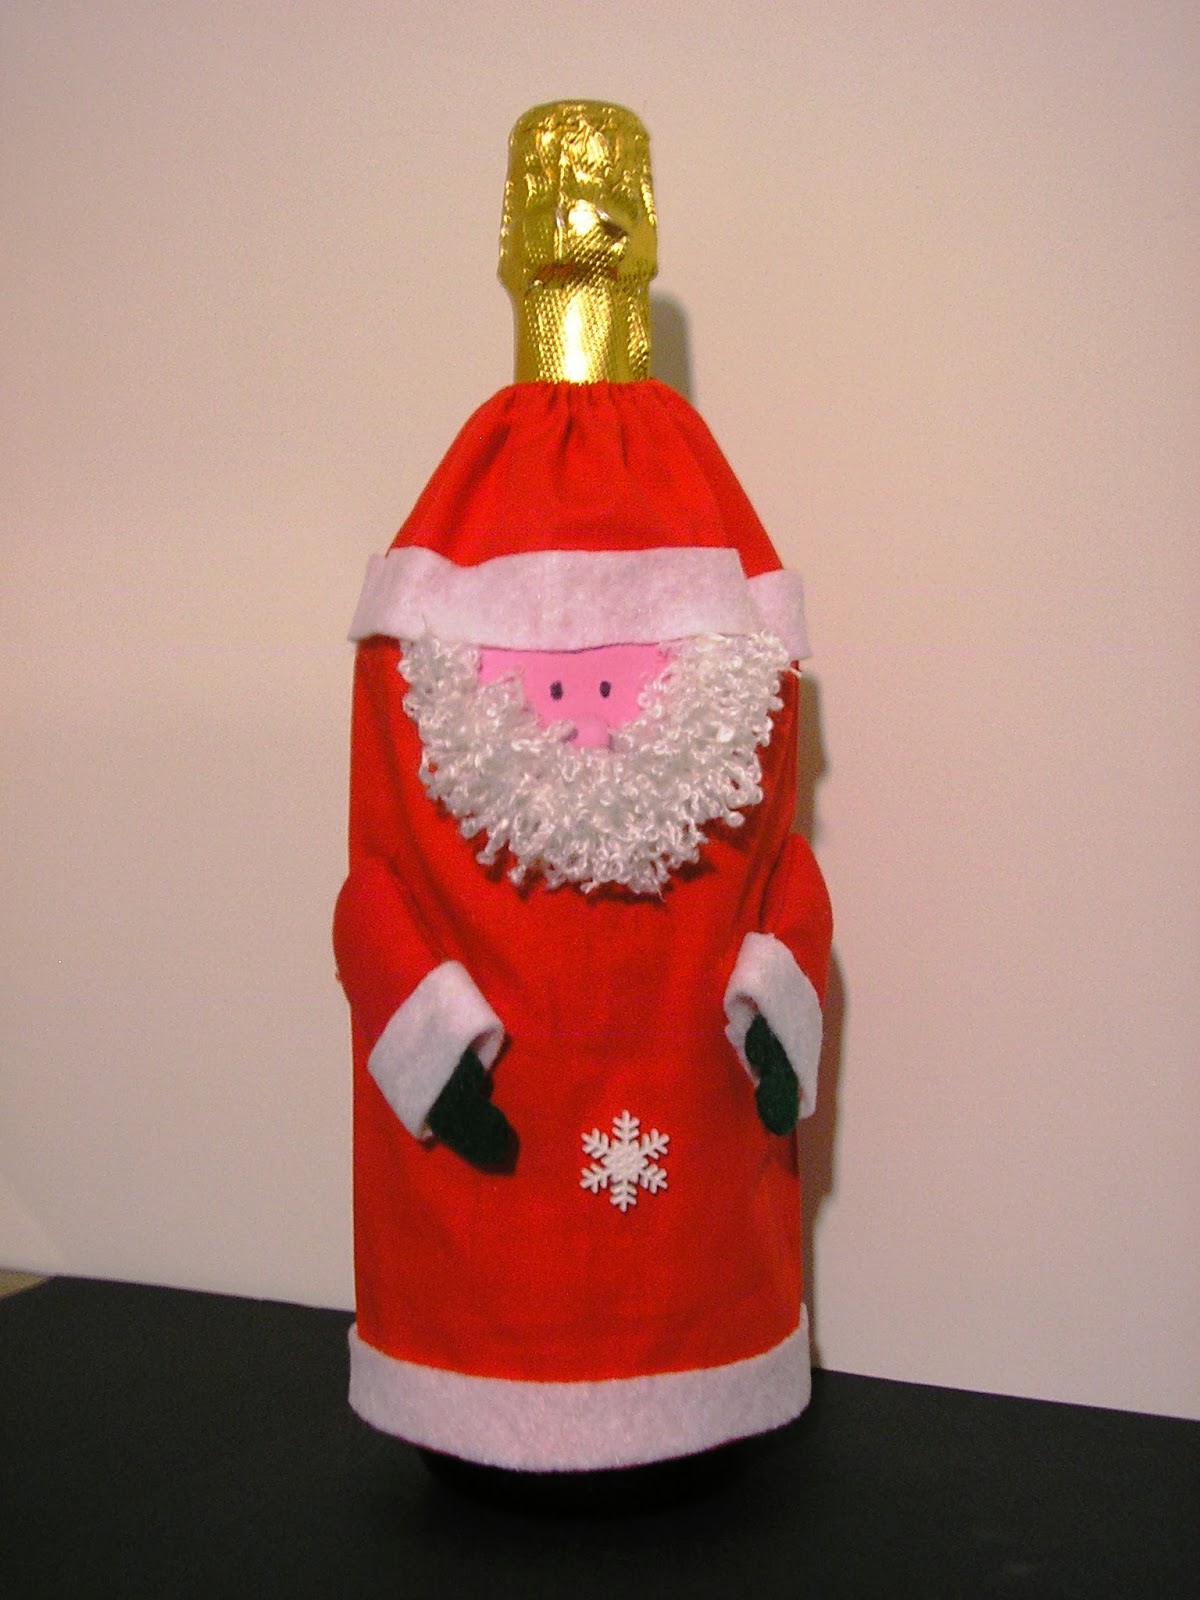 Crafty Sue "Santa" Wine Bottle Cover